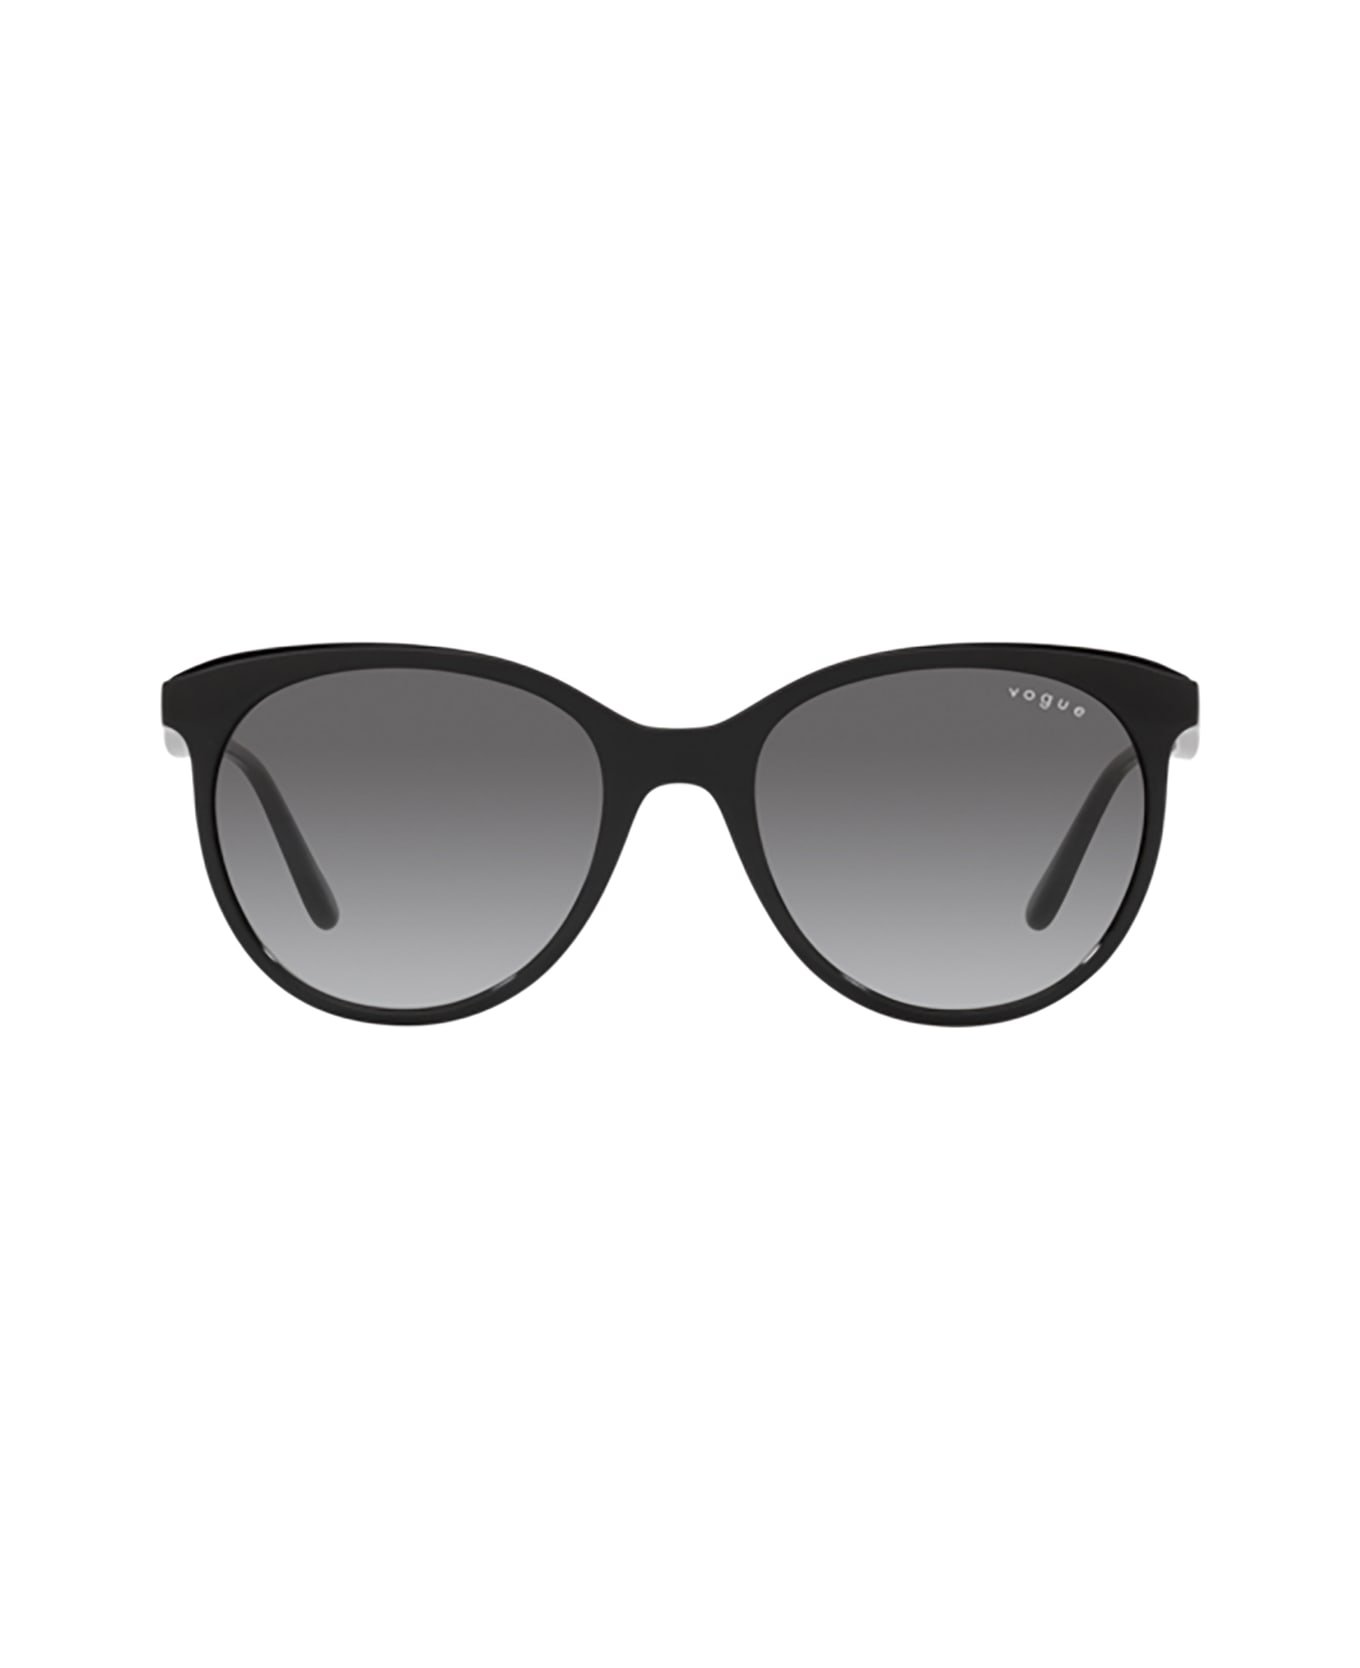 Vogue Eyewear Vo5453s Black Sunglasses - Black